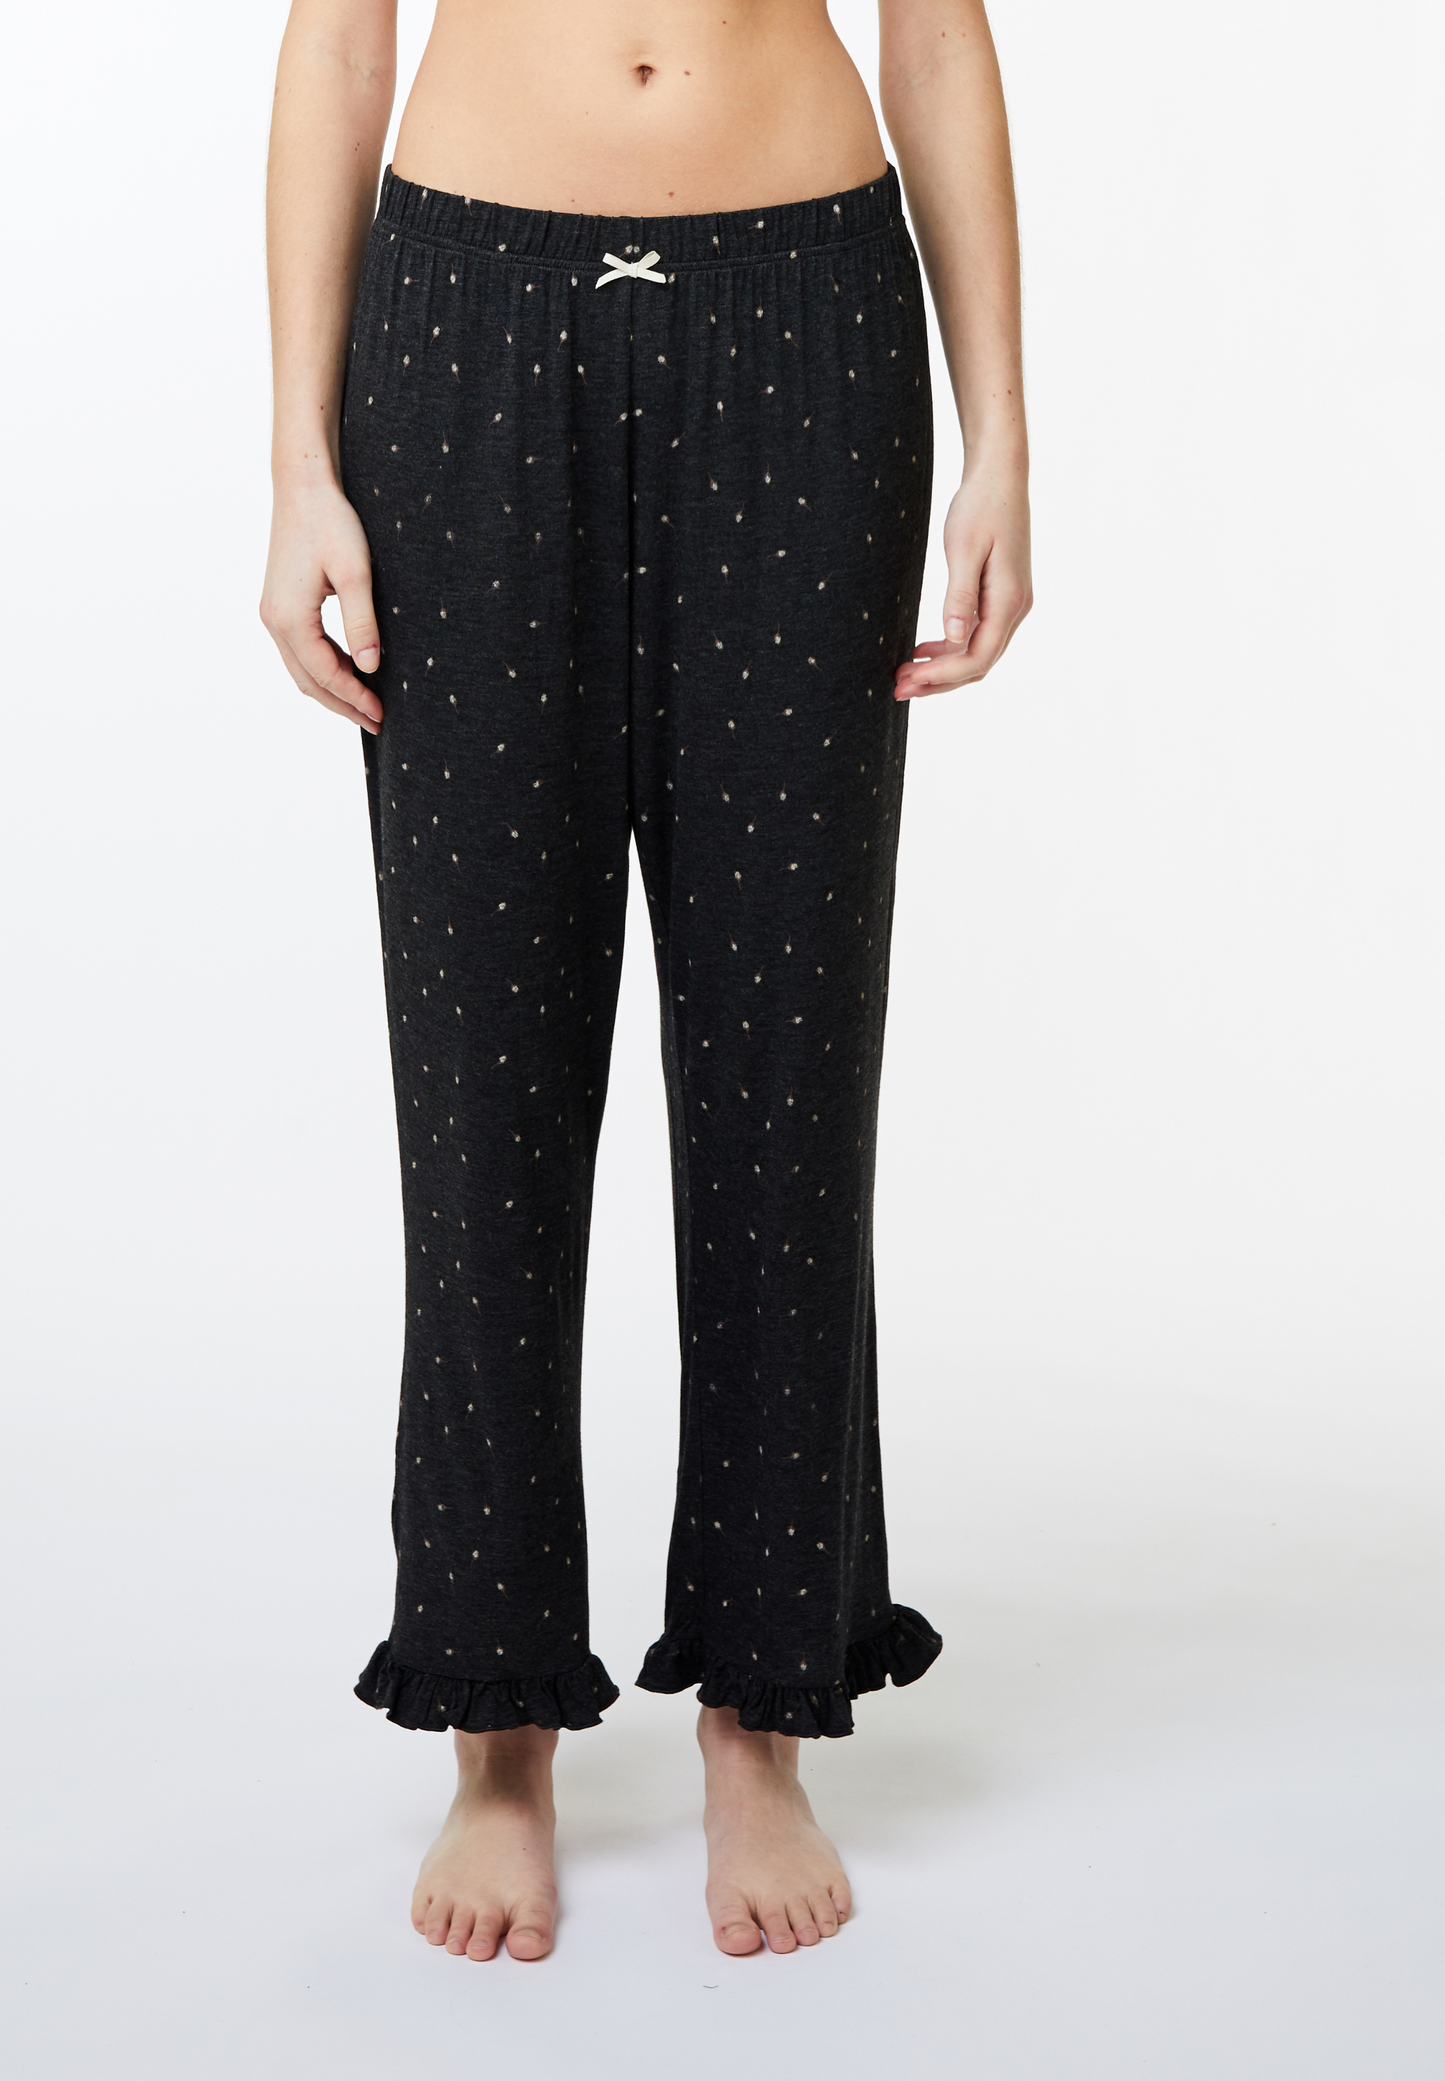 Jasmin Crop Pyjamasbukser med prikker mørkegrå